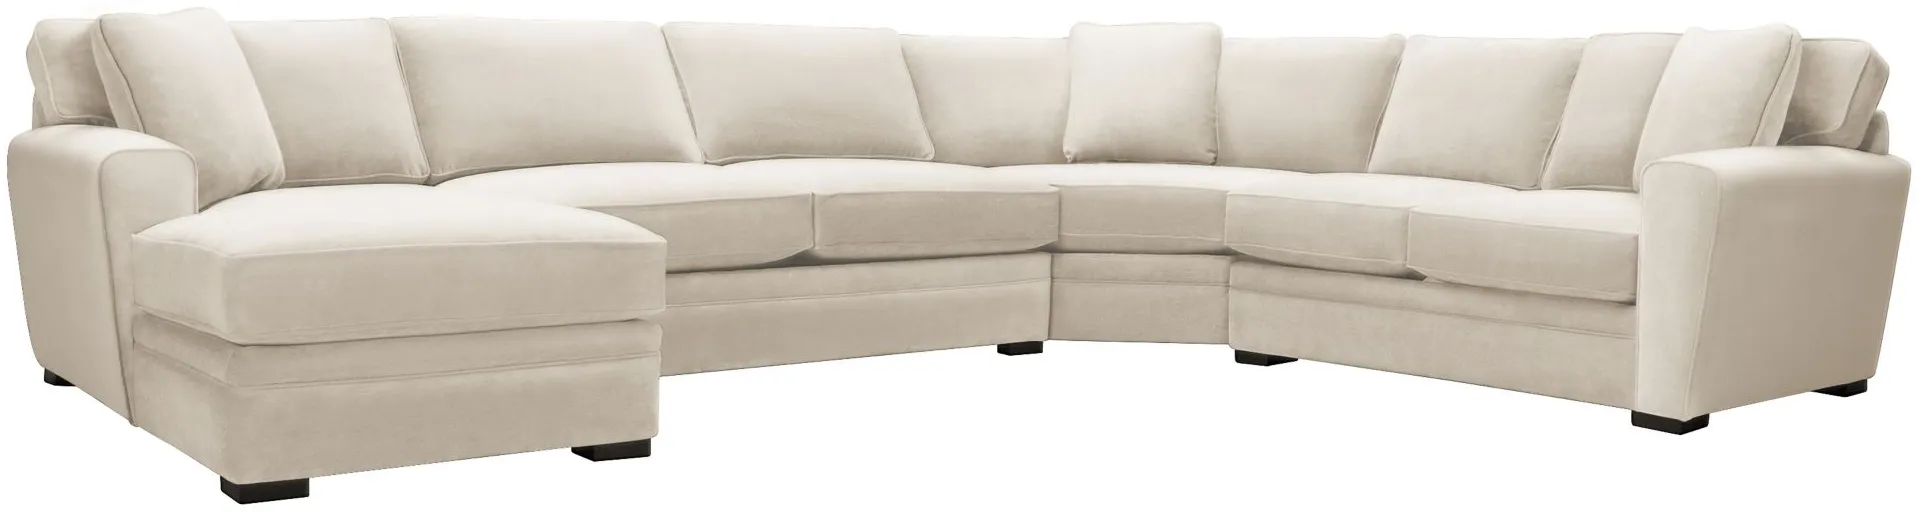 Artemis II 4-pc. Full Sleeper Sectional Sofa in Gypsy Cream by Jonathan Louis